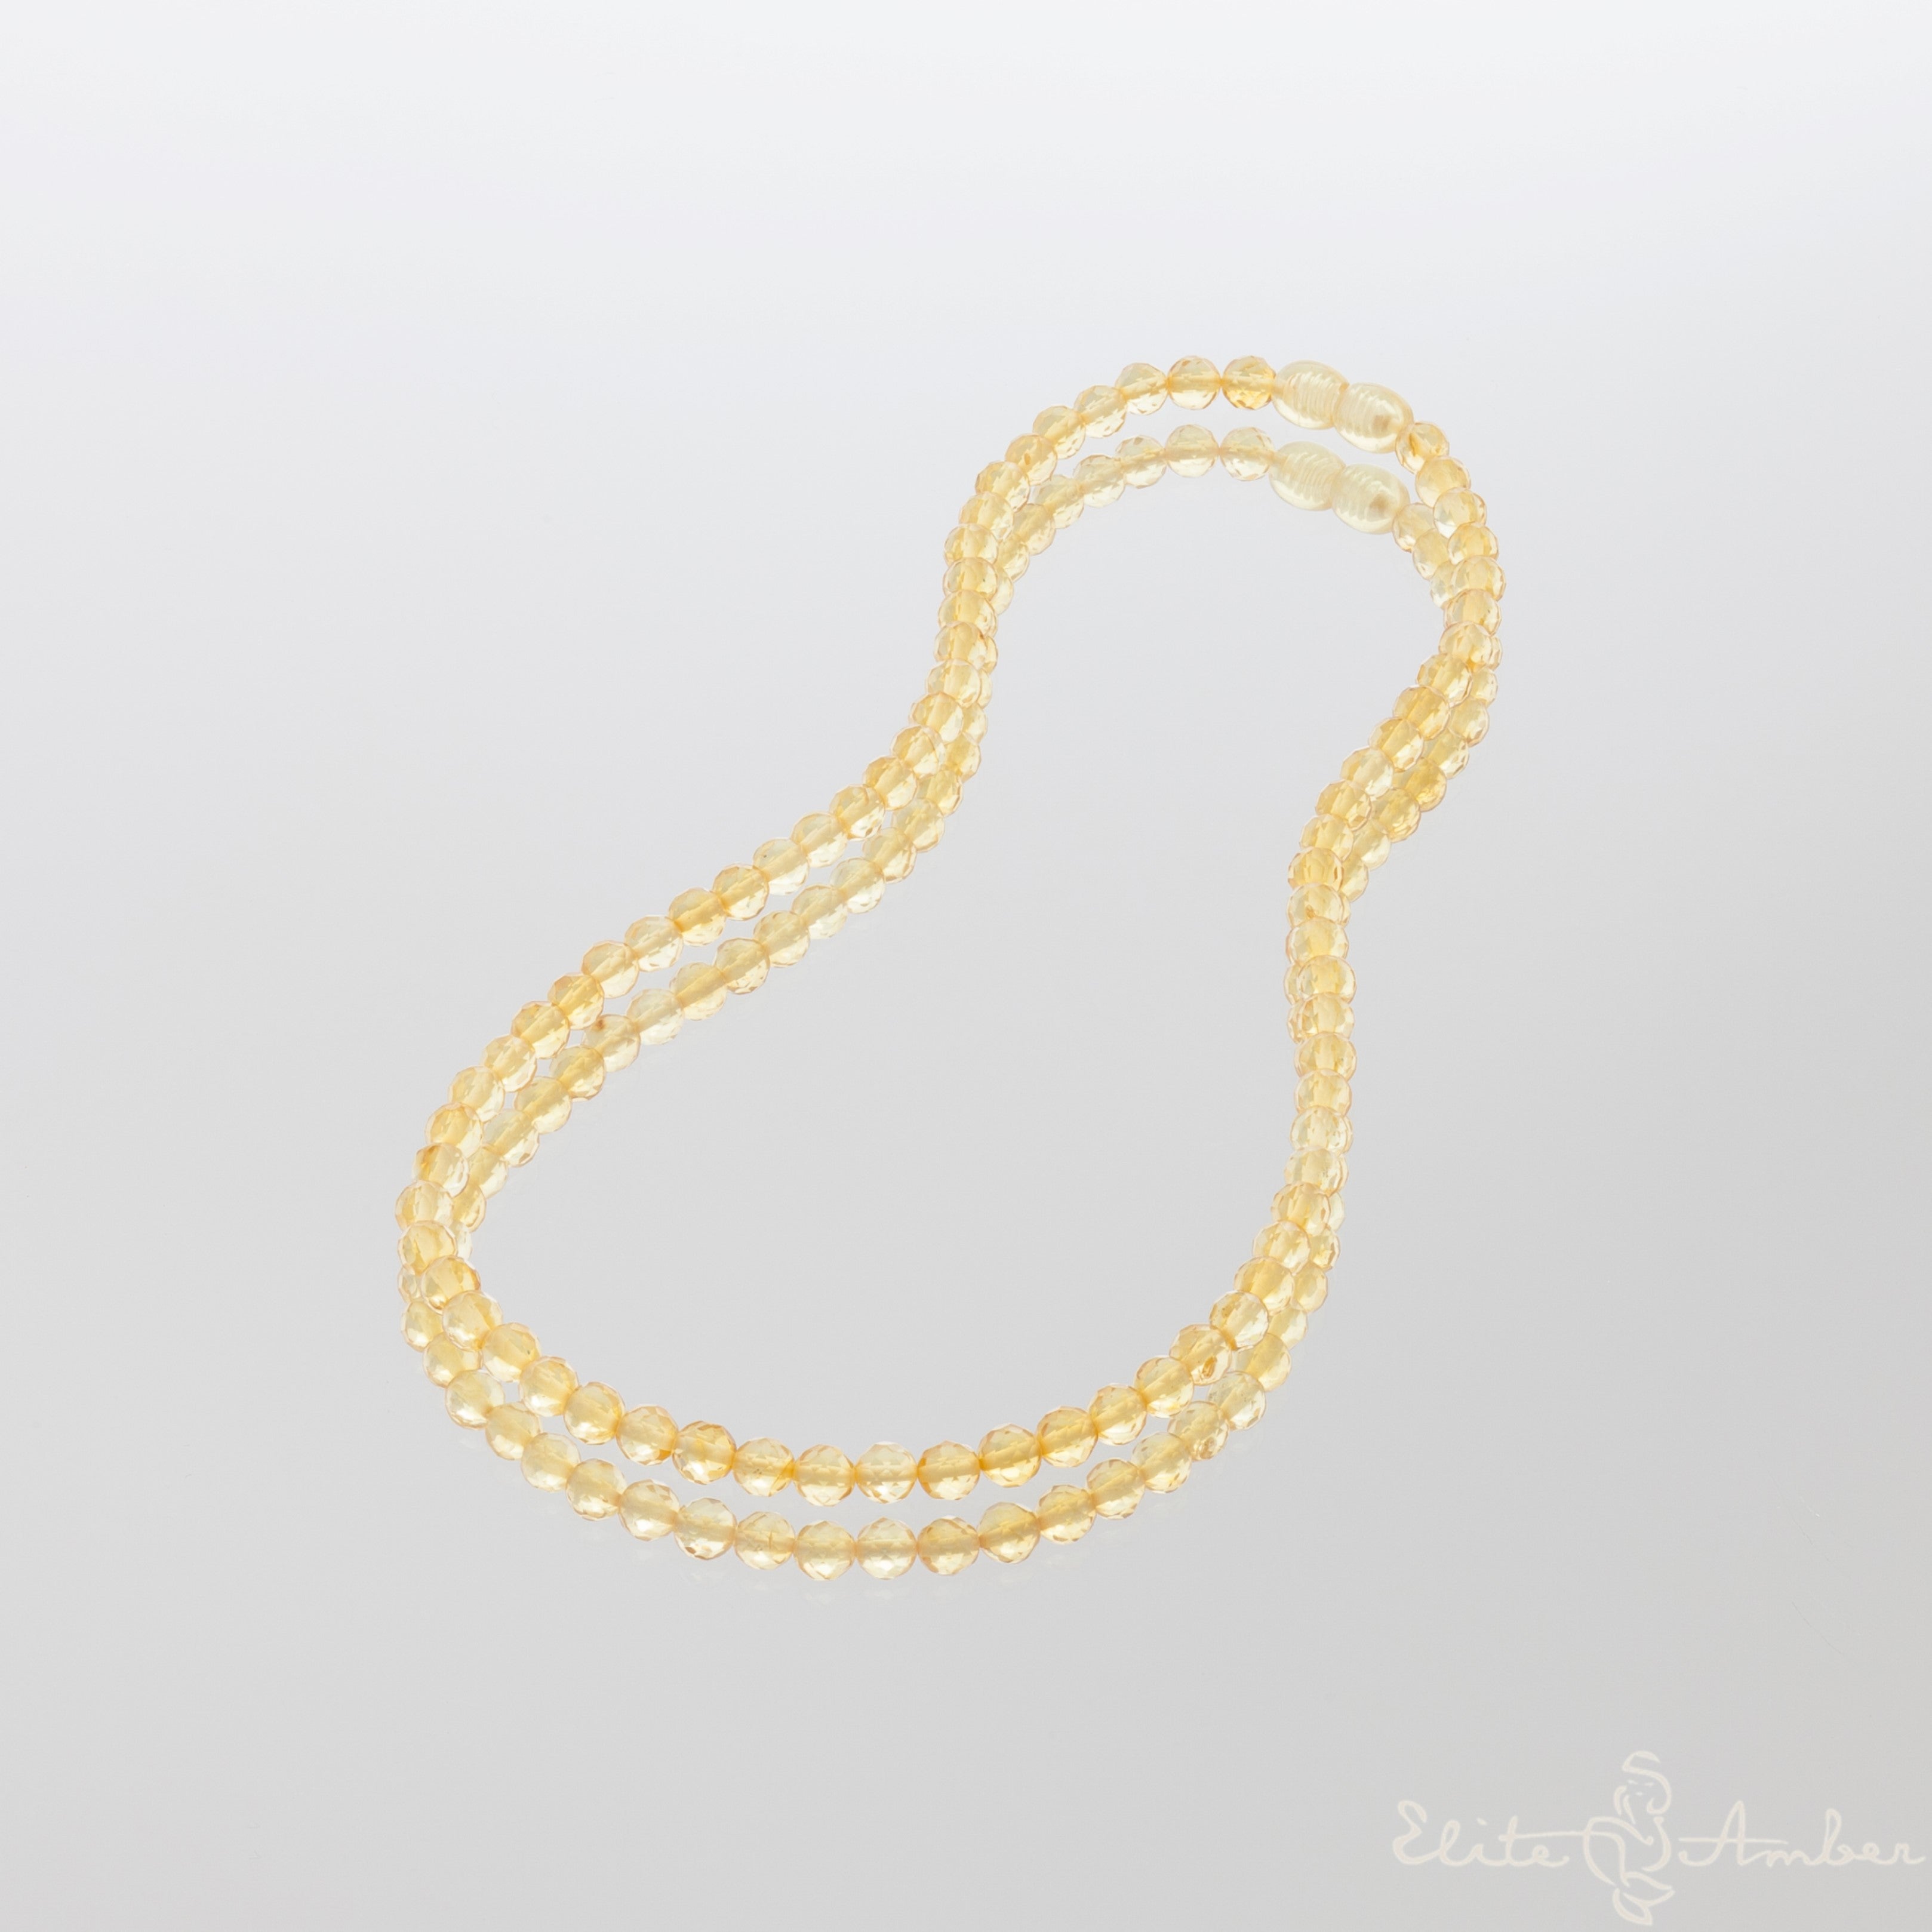 Amber necklace "Glossy lemon"